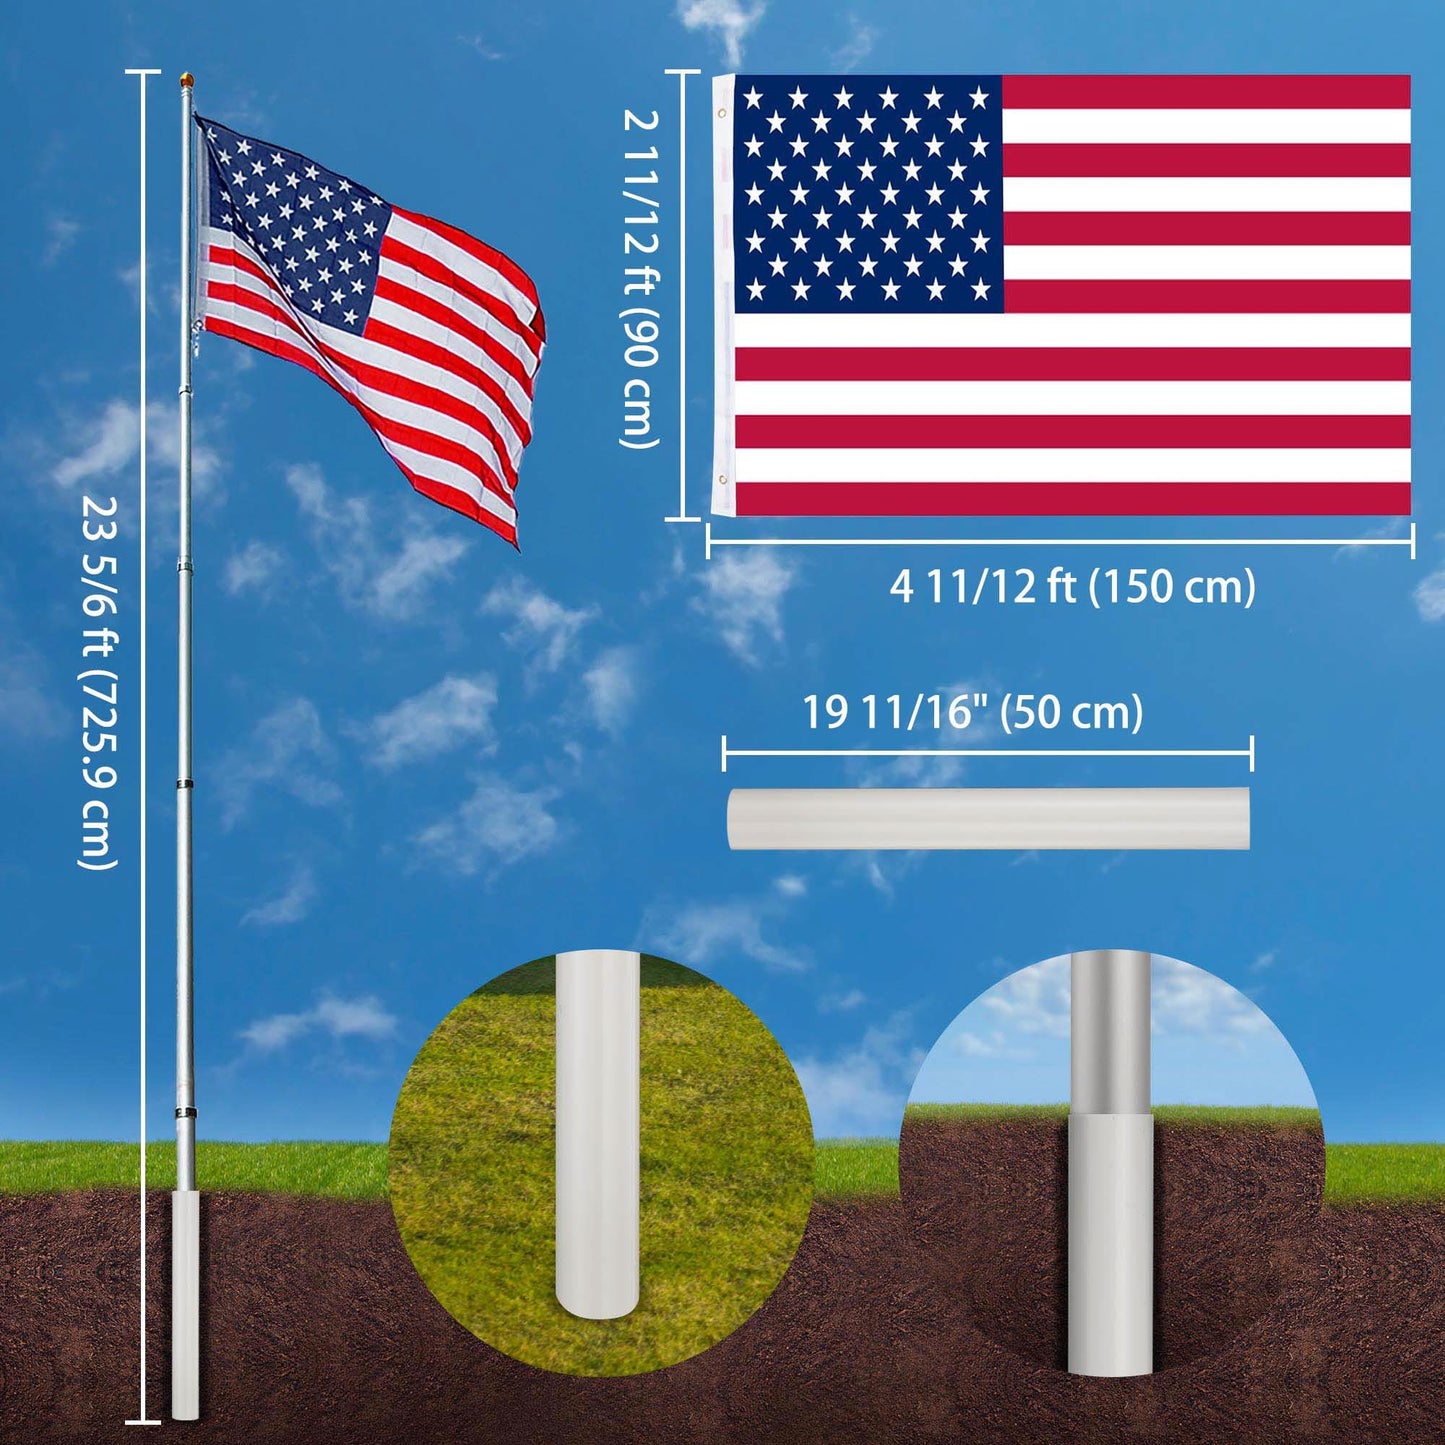 25 ft Al Flag Pole w/ US Flag and Ball